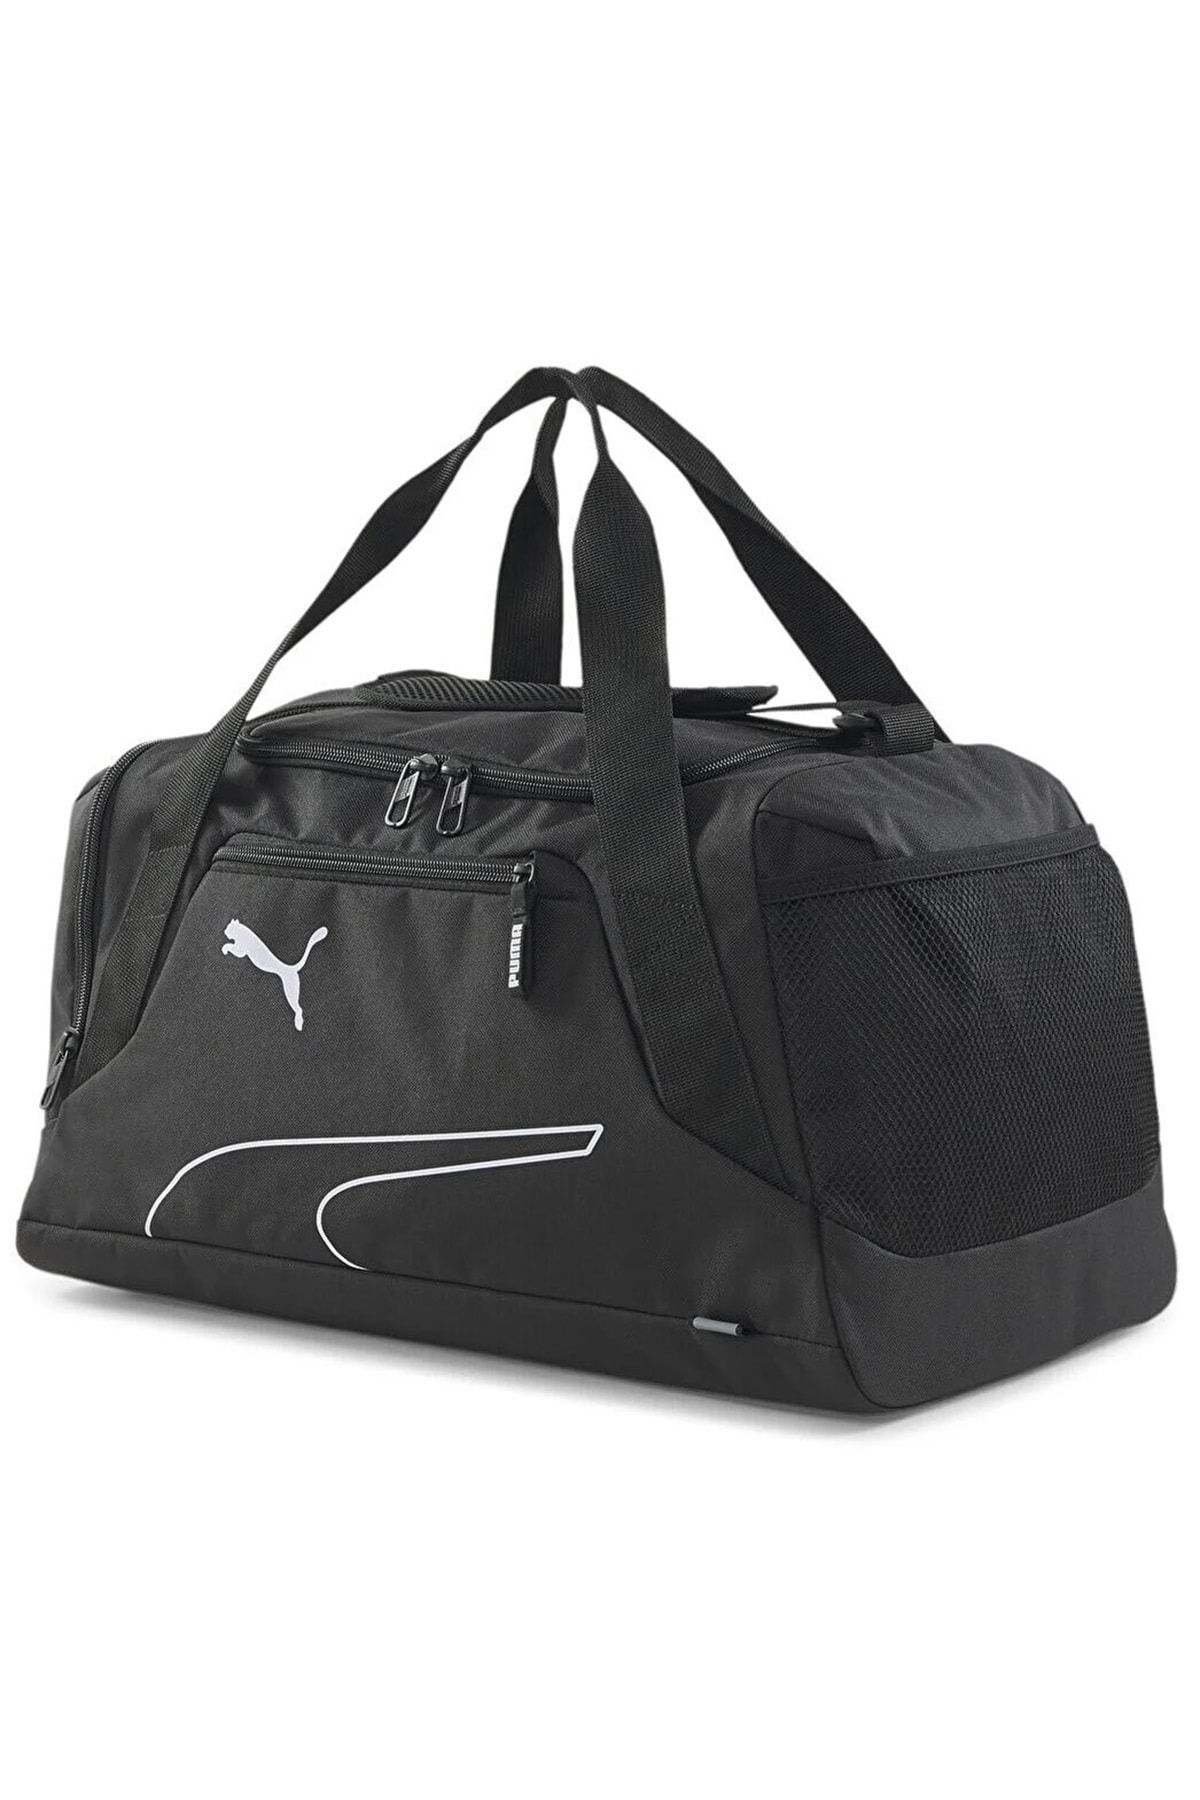 Puma 079230- Fundamentals Sports Bag S Unisex Spor Çanta Siyah